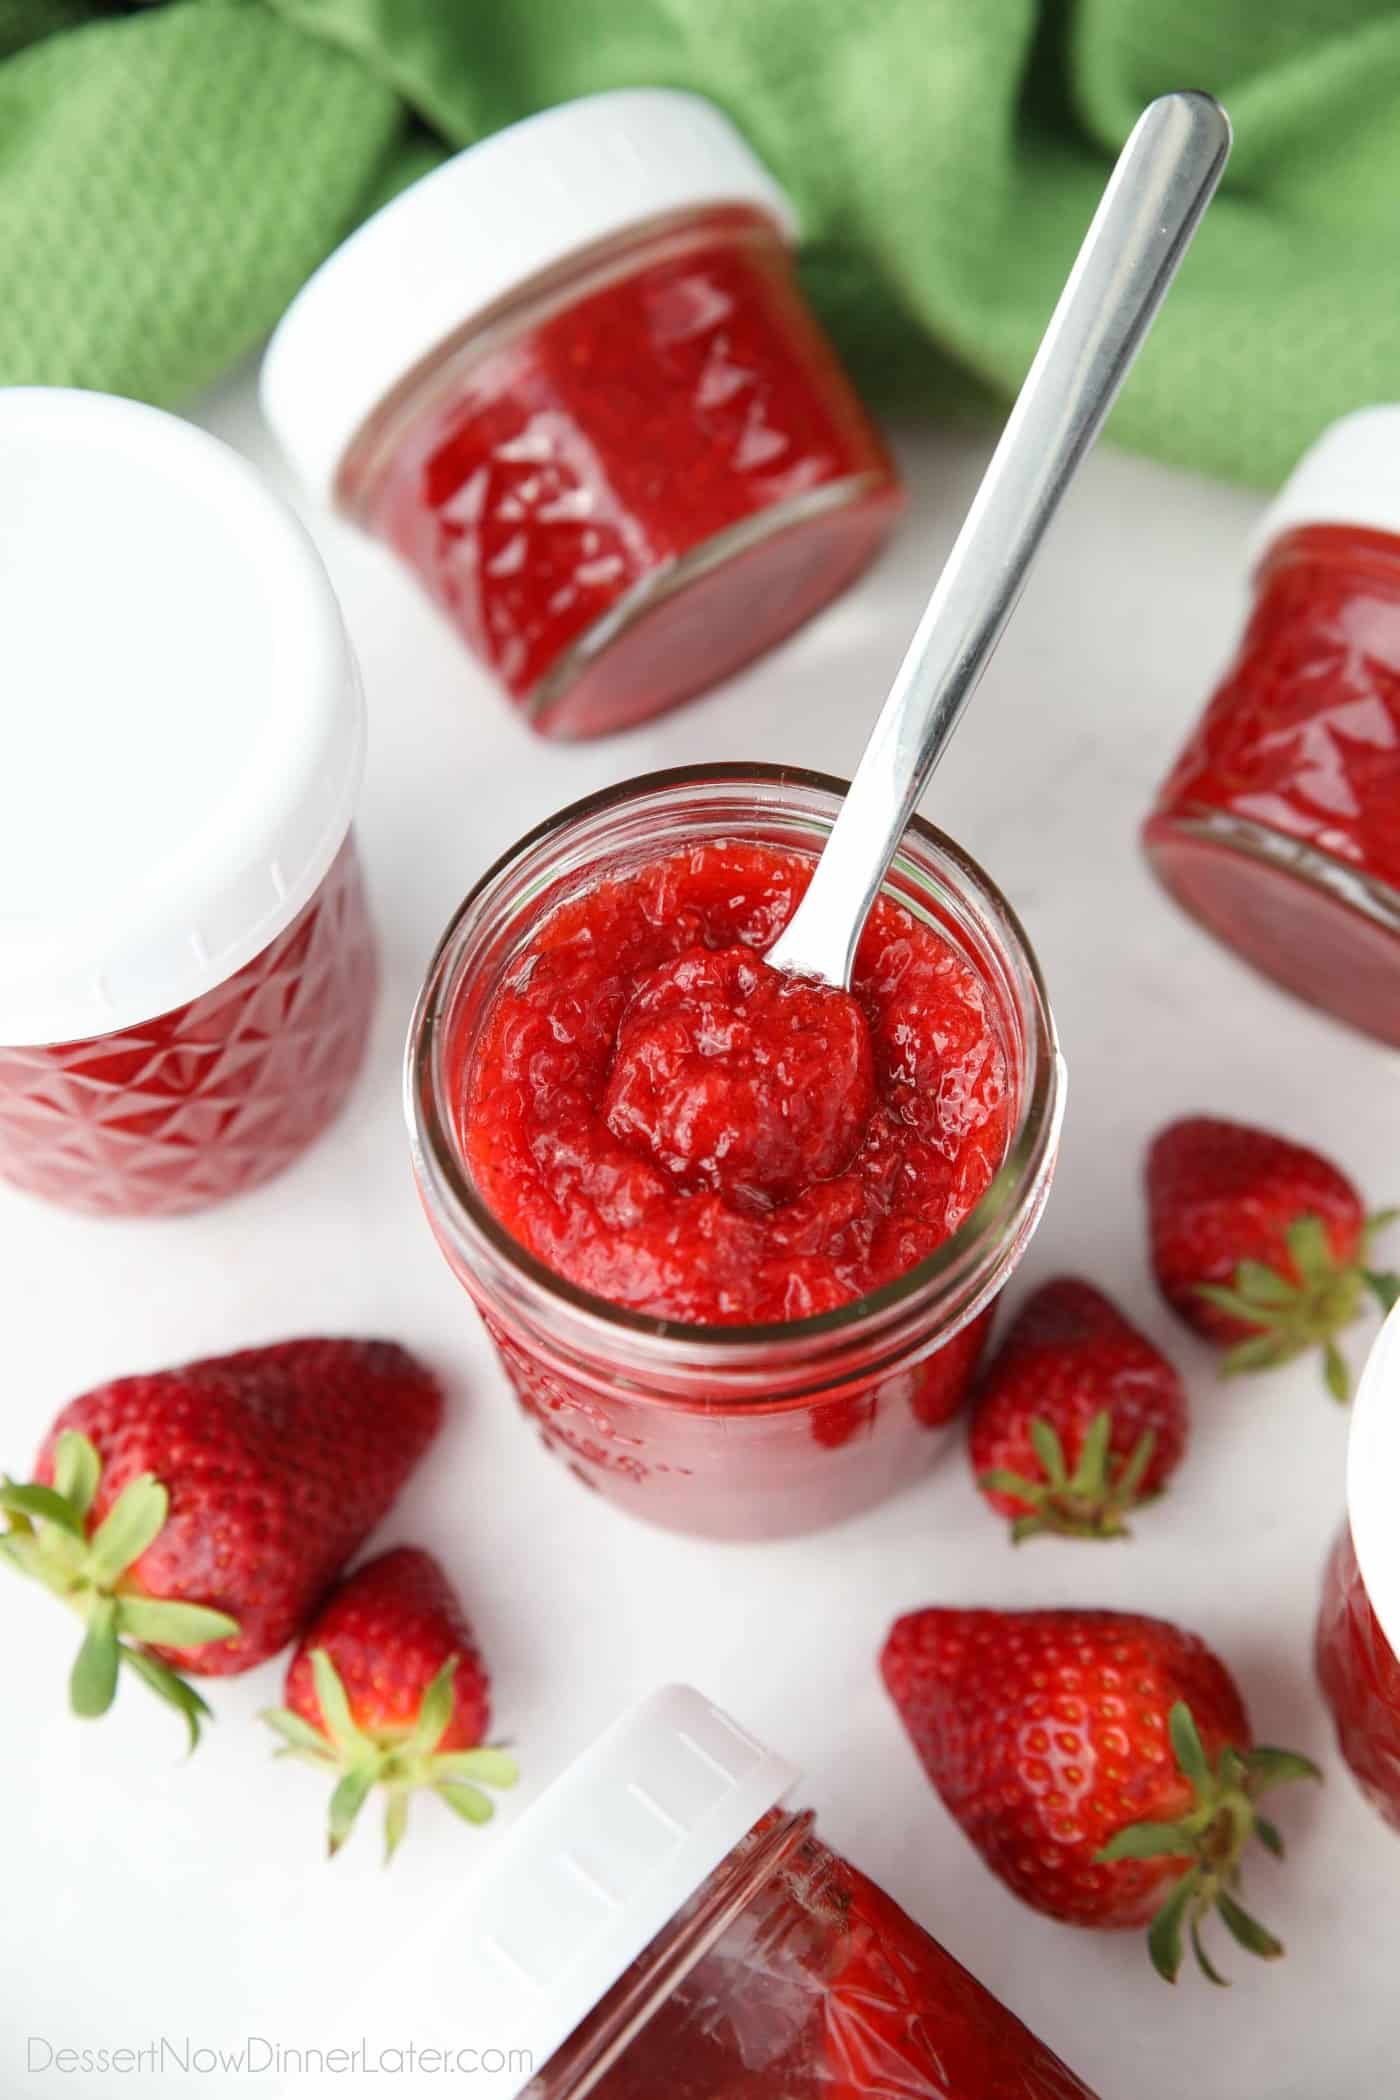 https://www.dessertnowdinnerlater.com/wp-content/uploads/2022/03/Low-Sugar-Strawberry-Freezer-Jam-2.jpg